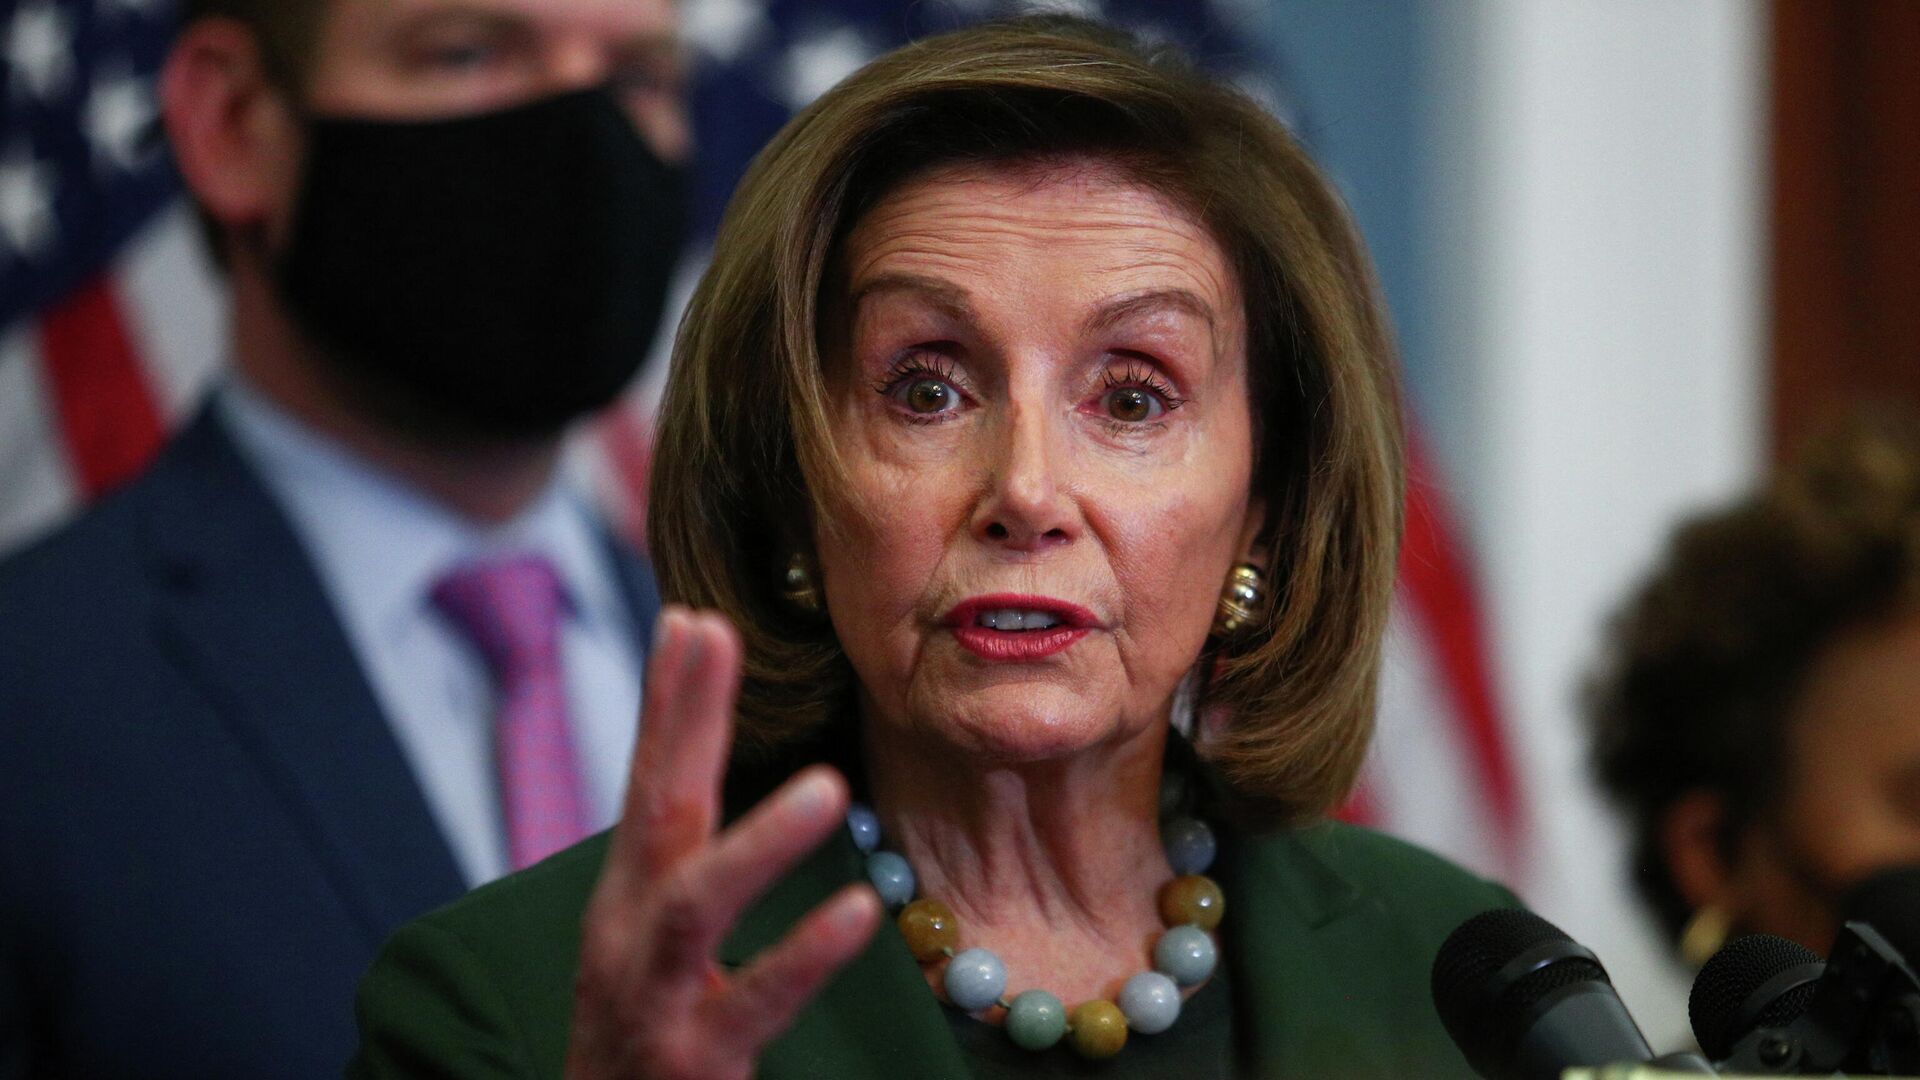 U.S. Speaker of the House Nancy Pelosi (D-CA) speaks during a weekly news conference on Capitol Hill in Washington, U.S., February 23, 2022 - Sputnik International, 1920, 23.02.2022